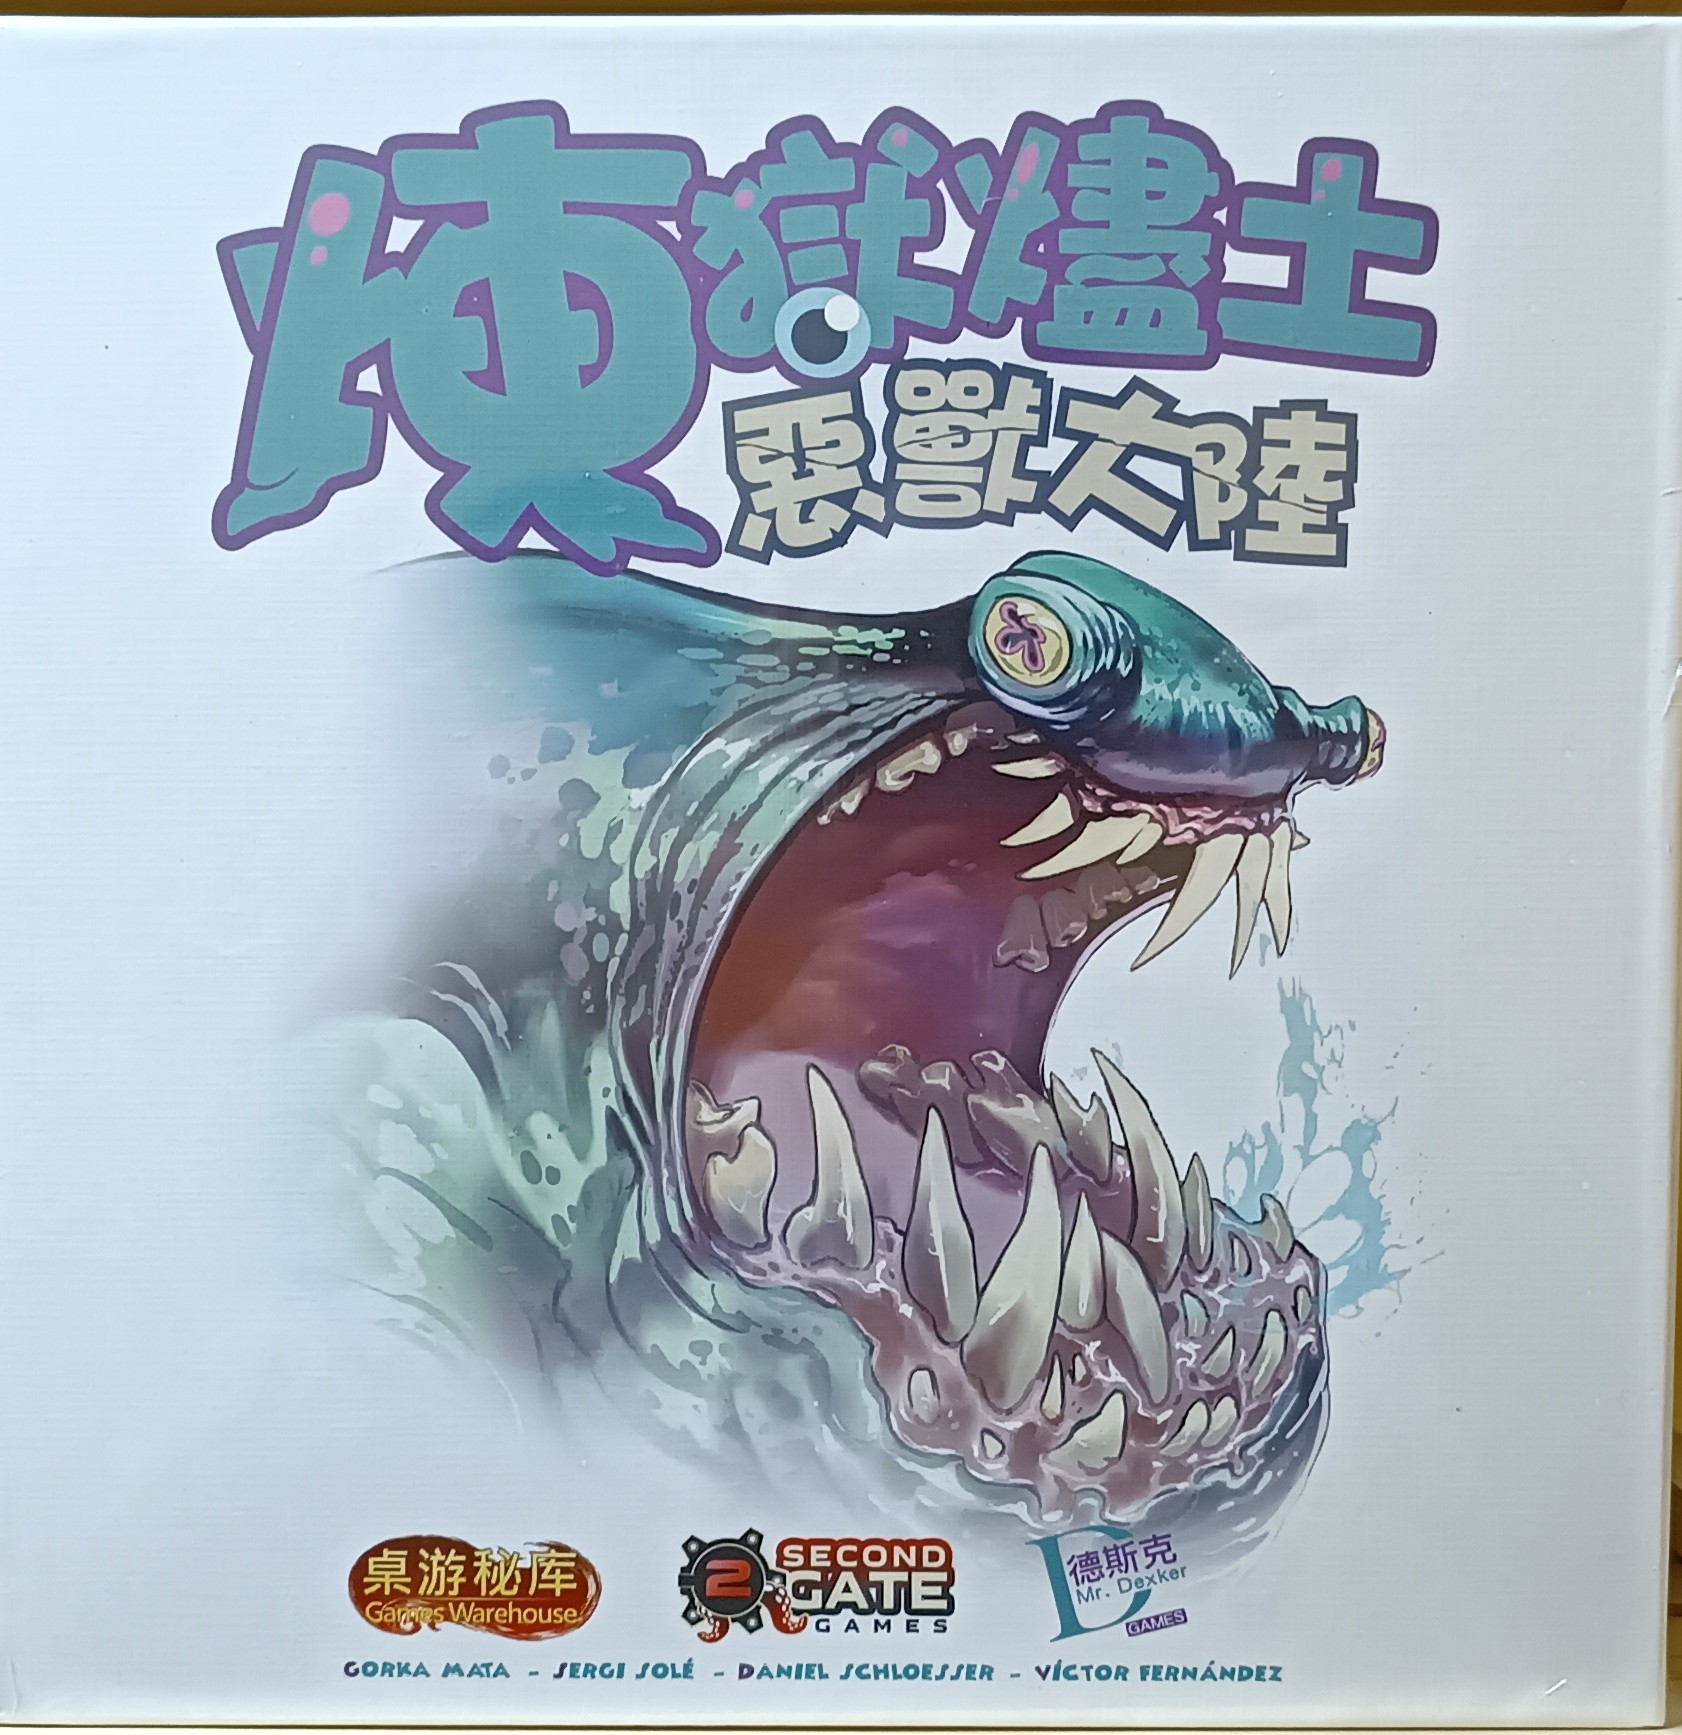 Настольная игра Second Gate Games Monster Lands Retail version на английском языке настольная игра сундучок знаний brainbox maths plus на английском языке 91040